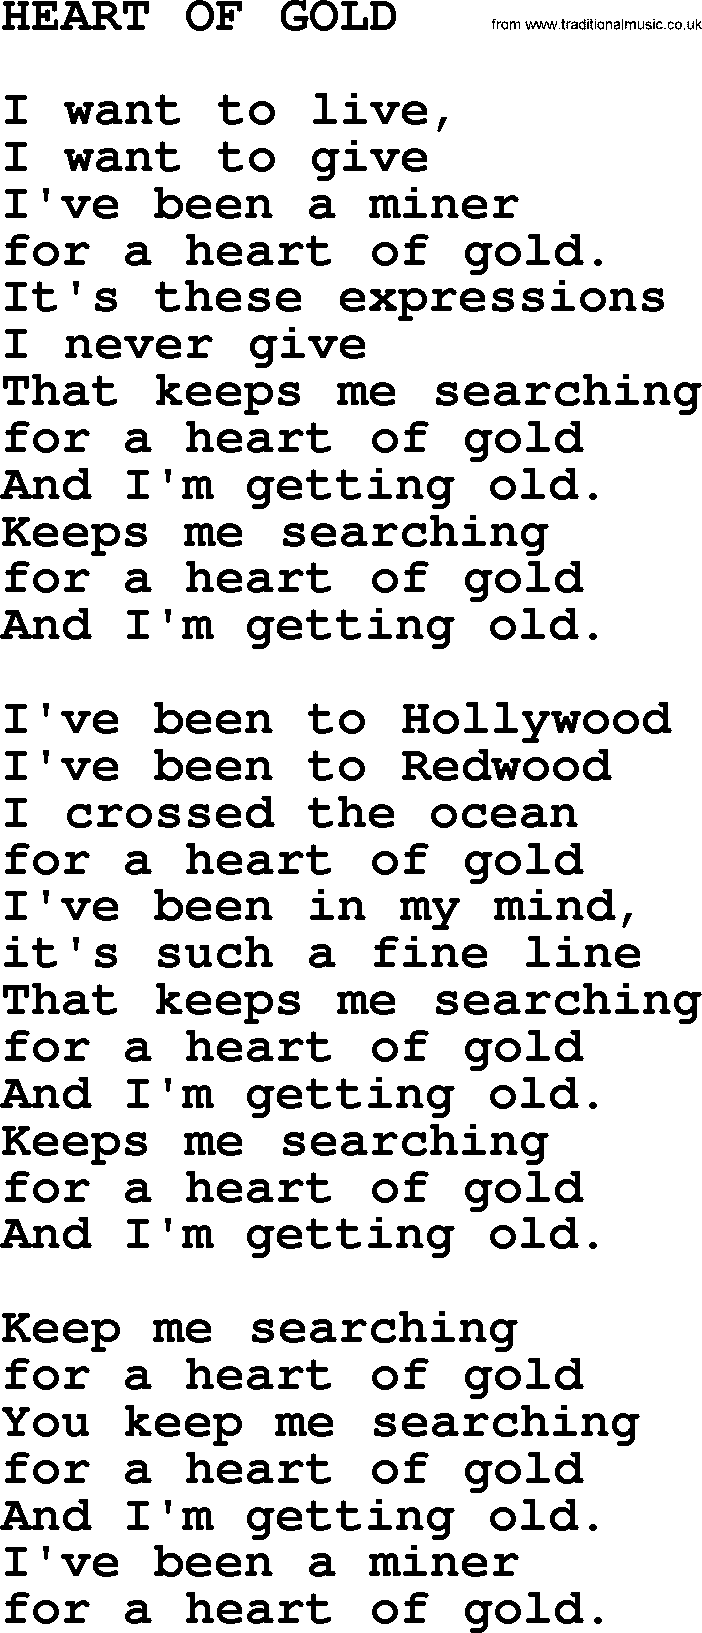 Johnny Cash song Heart Of Gold.txt lyrics